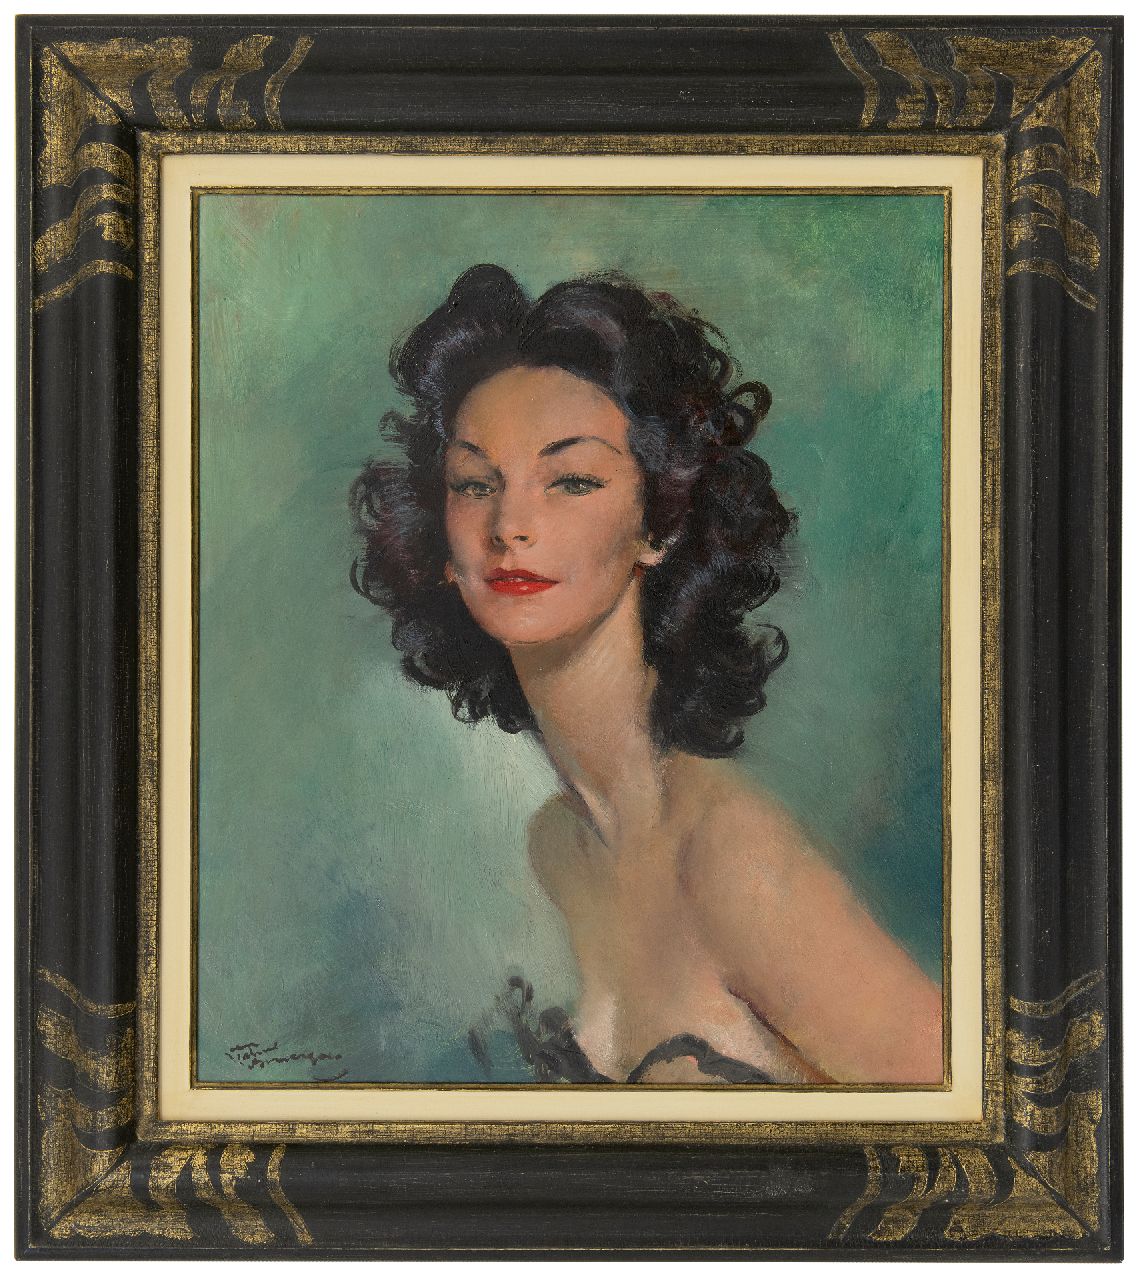 Domergue J.G.  | Jean-Gabriel Domergue | Schilderijen te koop aangeboden | Jeune femme aux cheveux noirs, olieverf op board 54,8 x 46,0 cm, gesigneerd linksonder